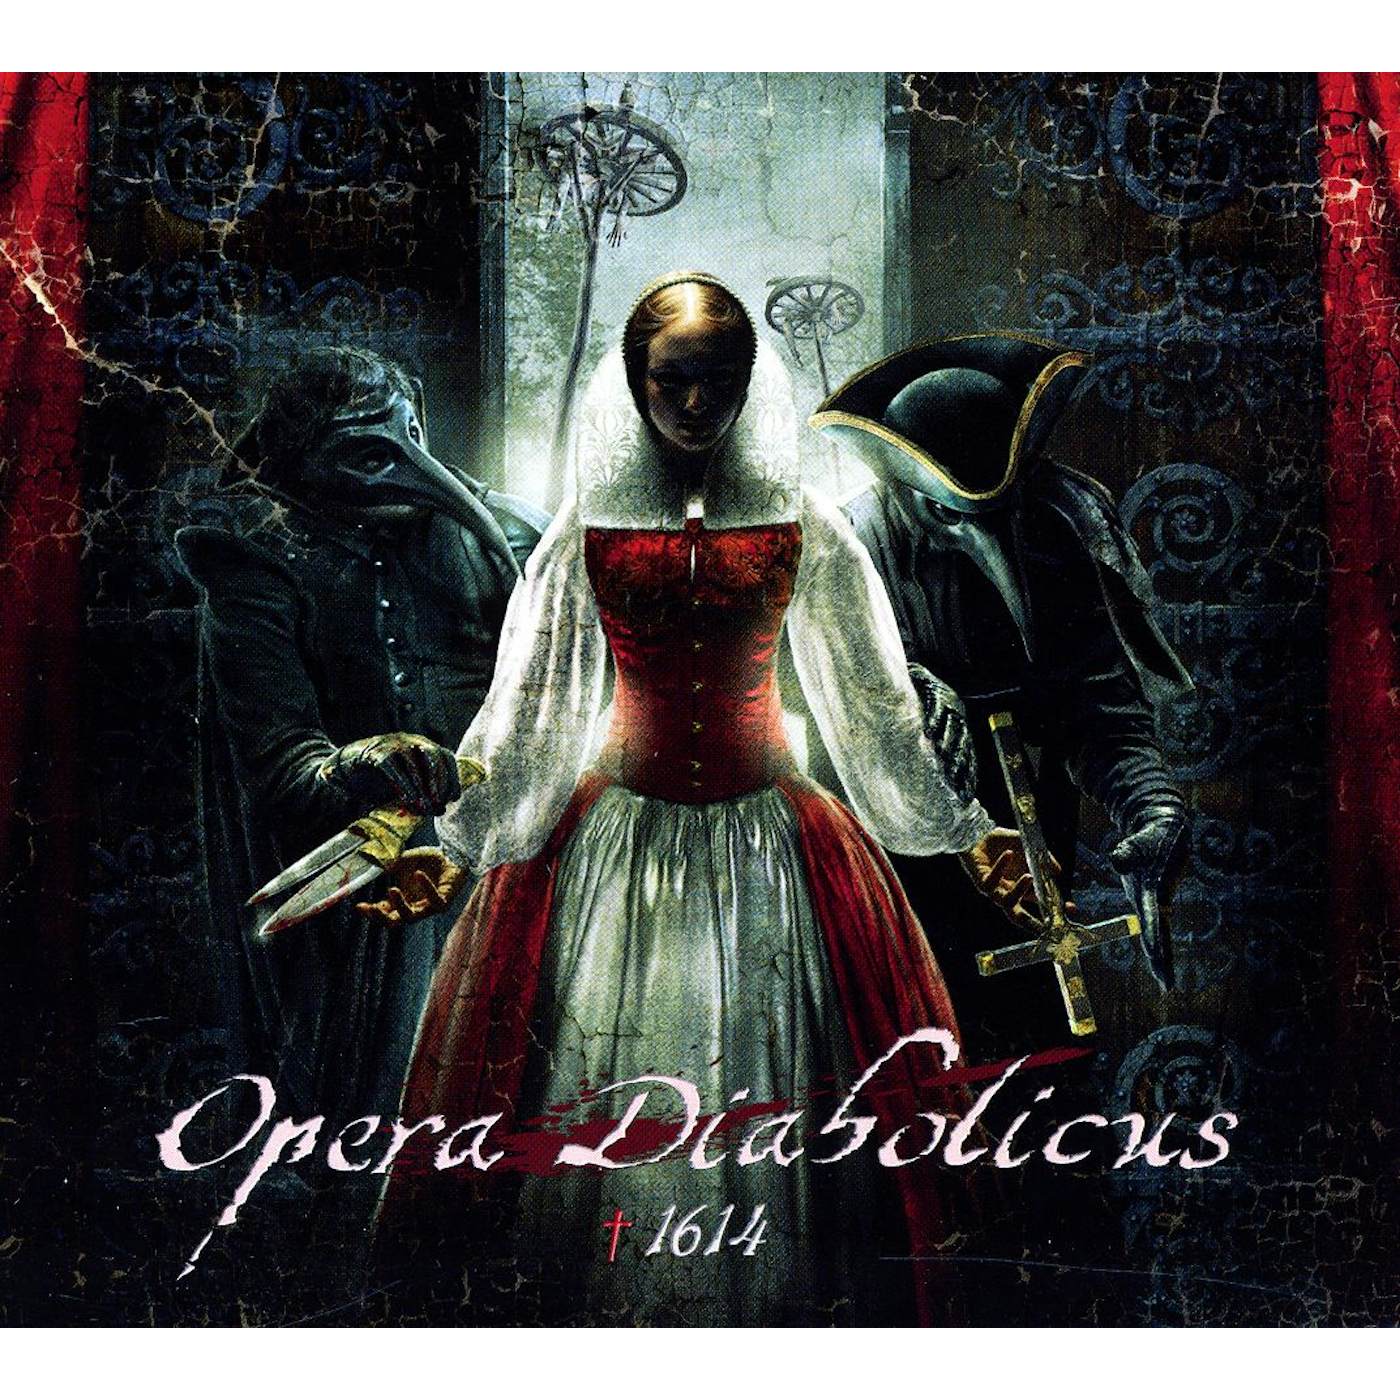 Opera Diabolicus +1614 CD